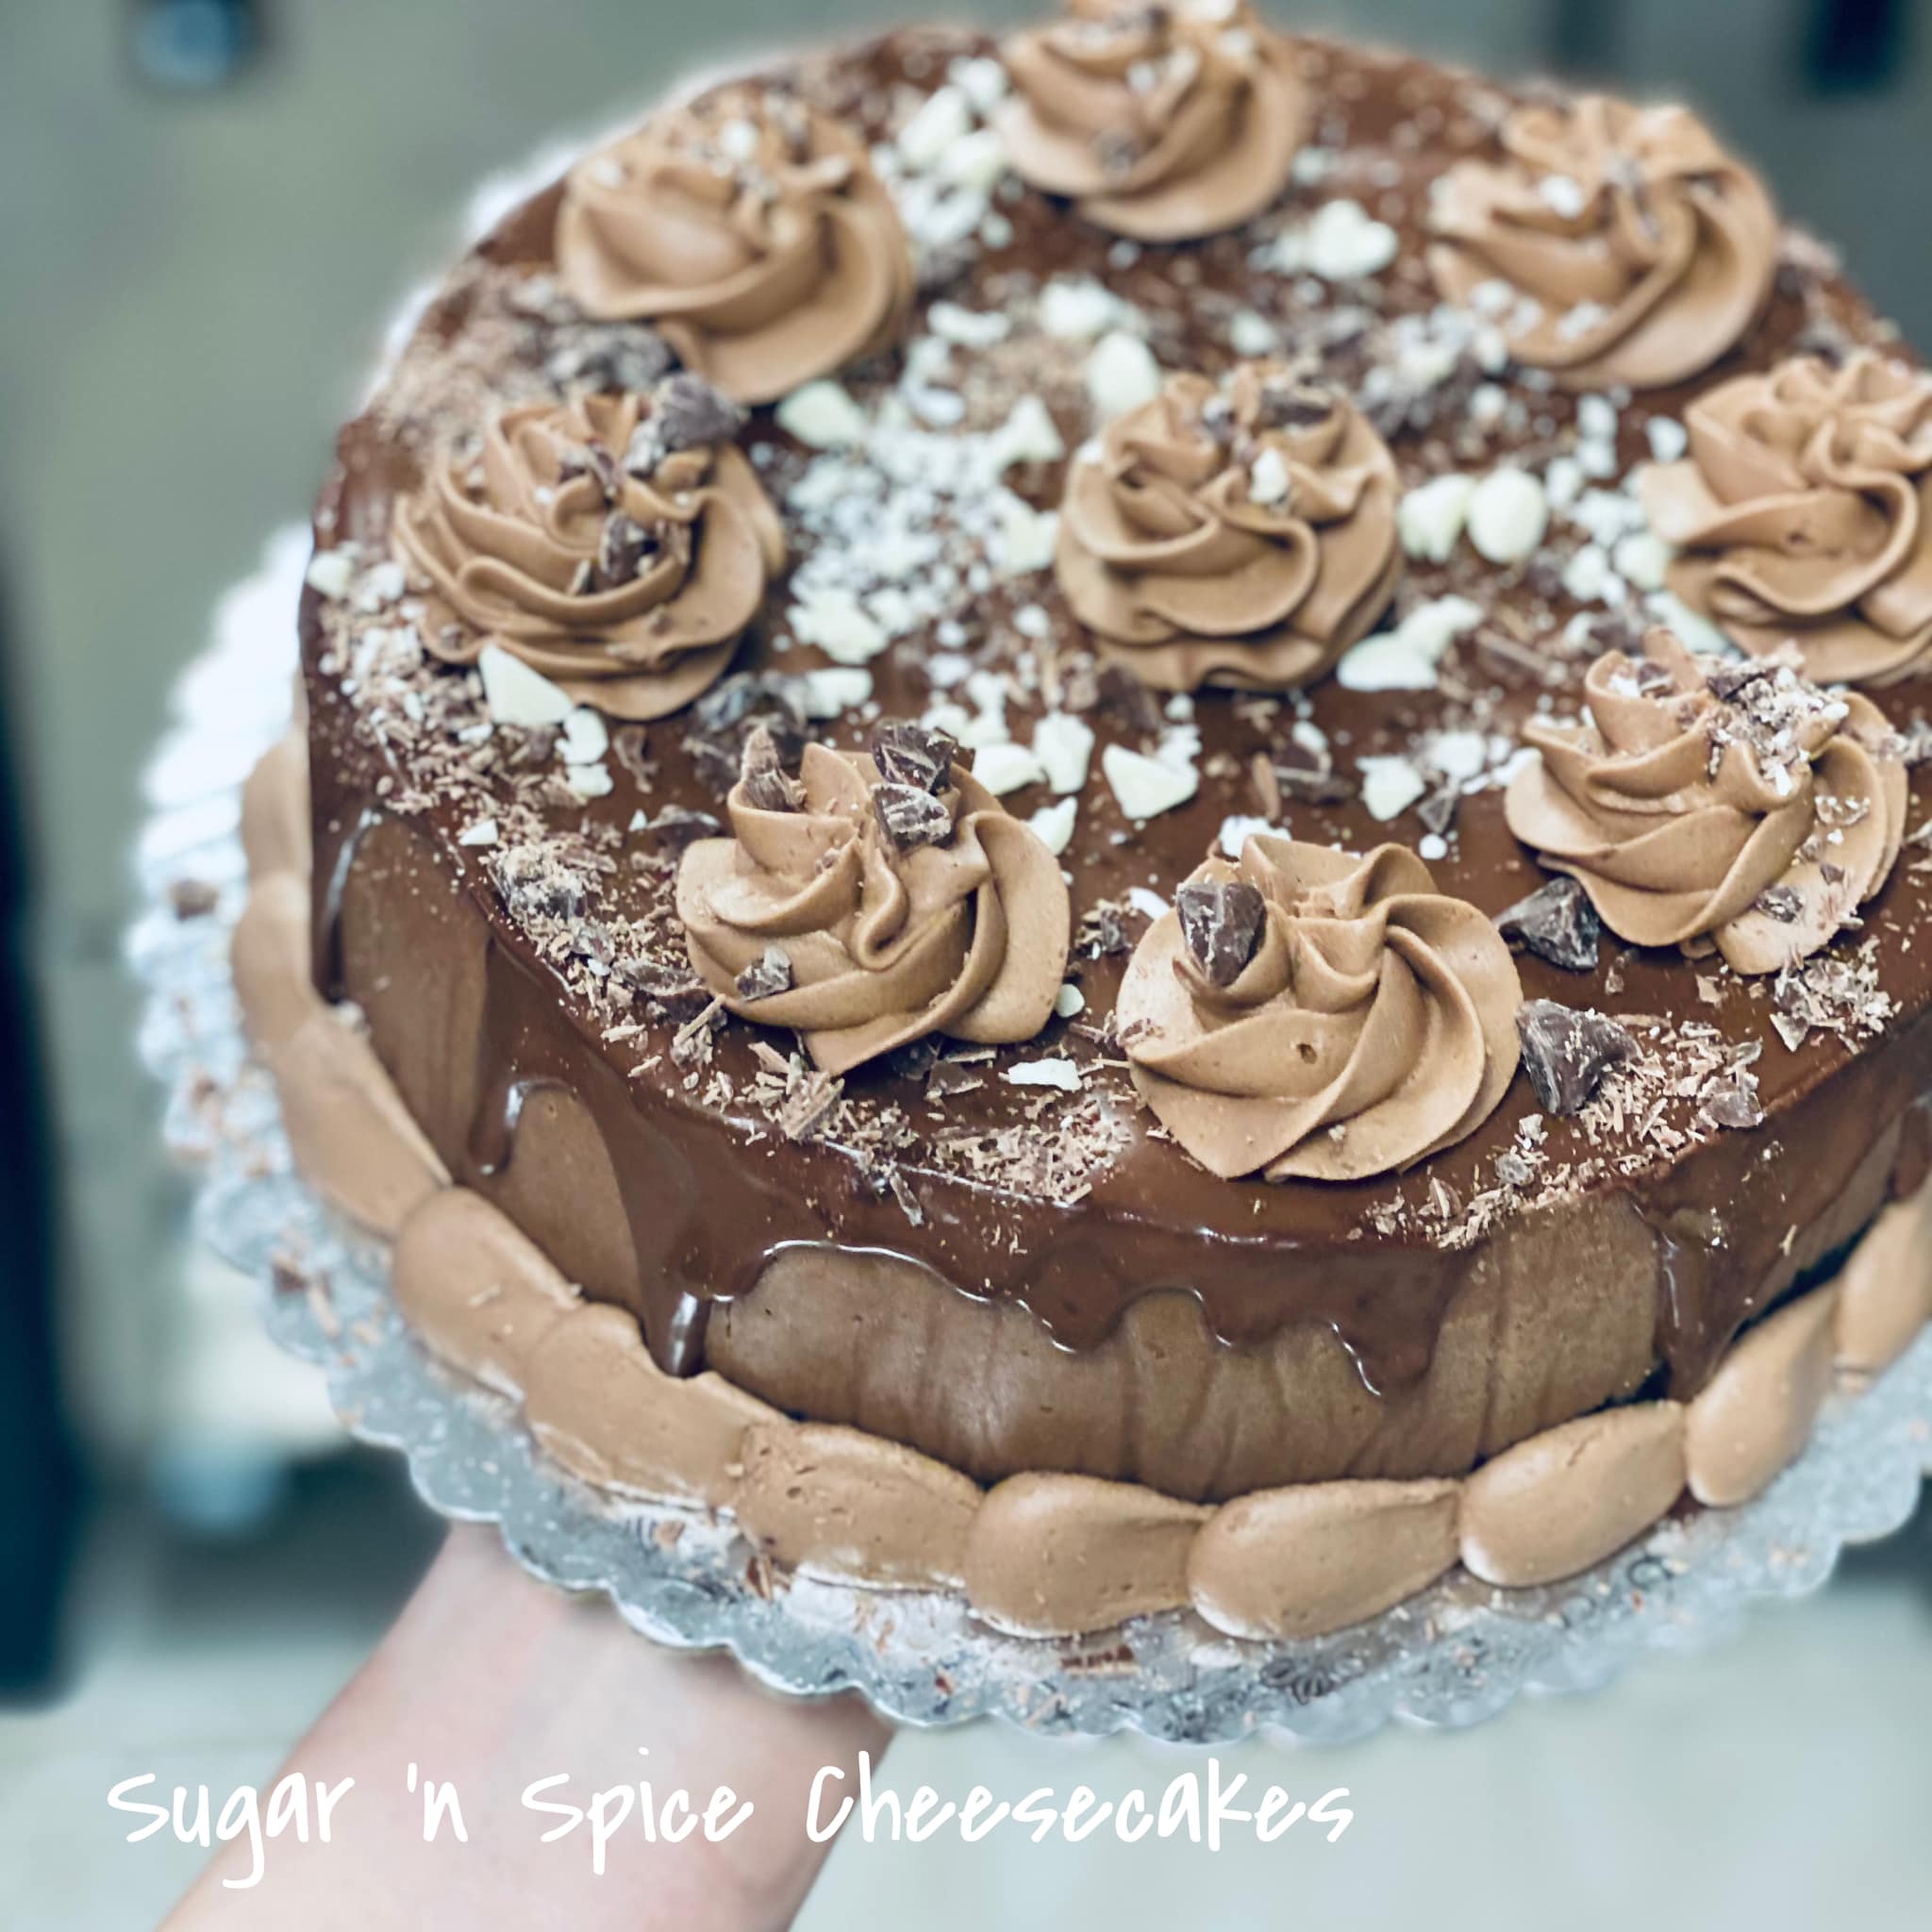 Sugar 'n Spice Cheesecakes & Coffee